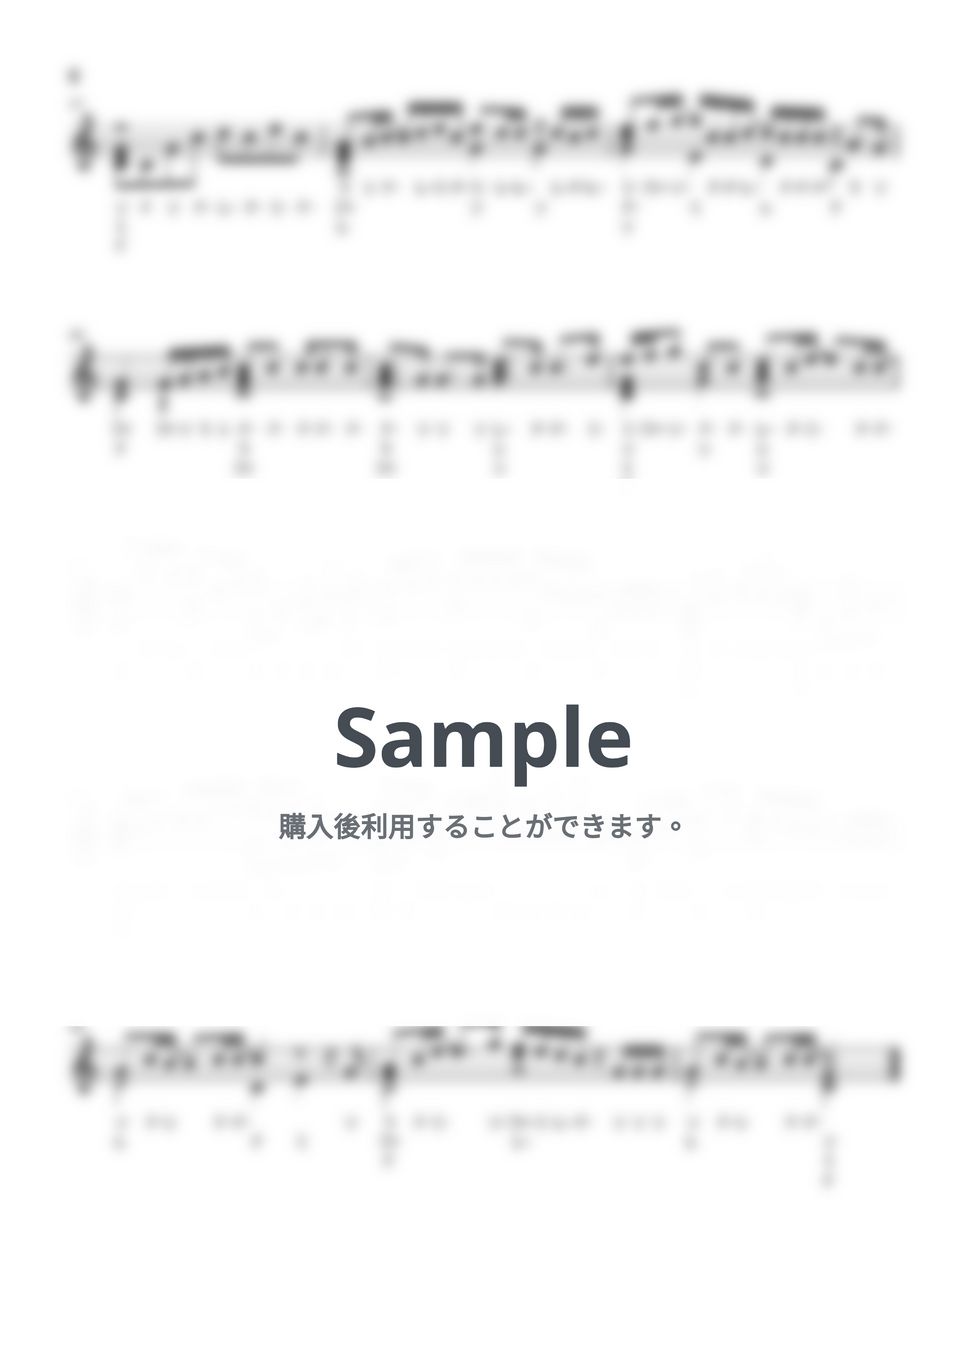 back number - HAPPY BIRTHDAY (ドレミ表記 演奏付き カリンバ楽譜) by カリンバ小僧